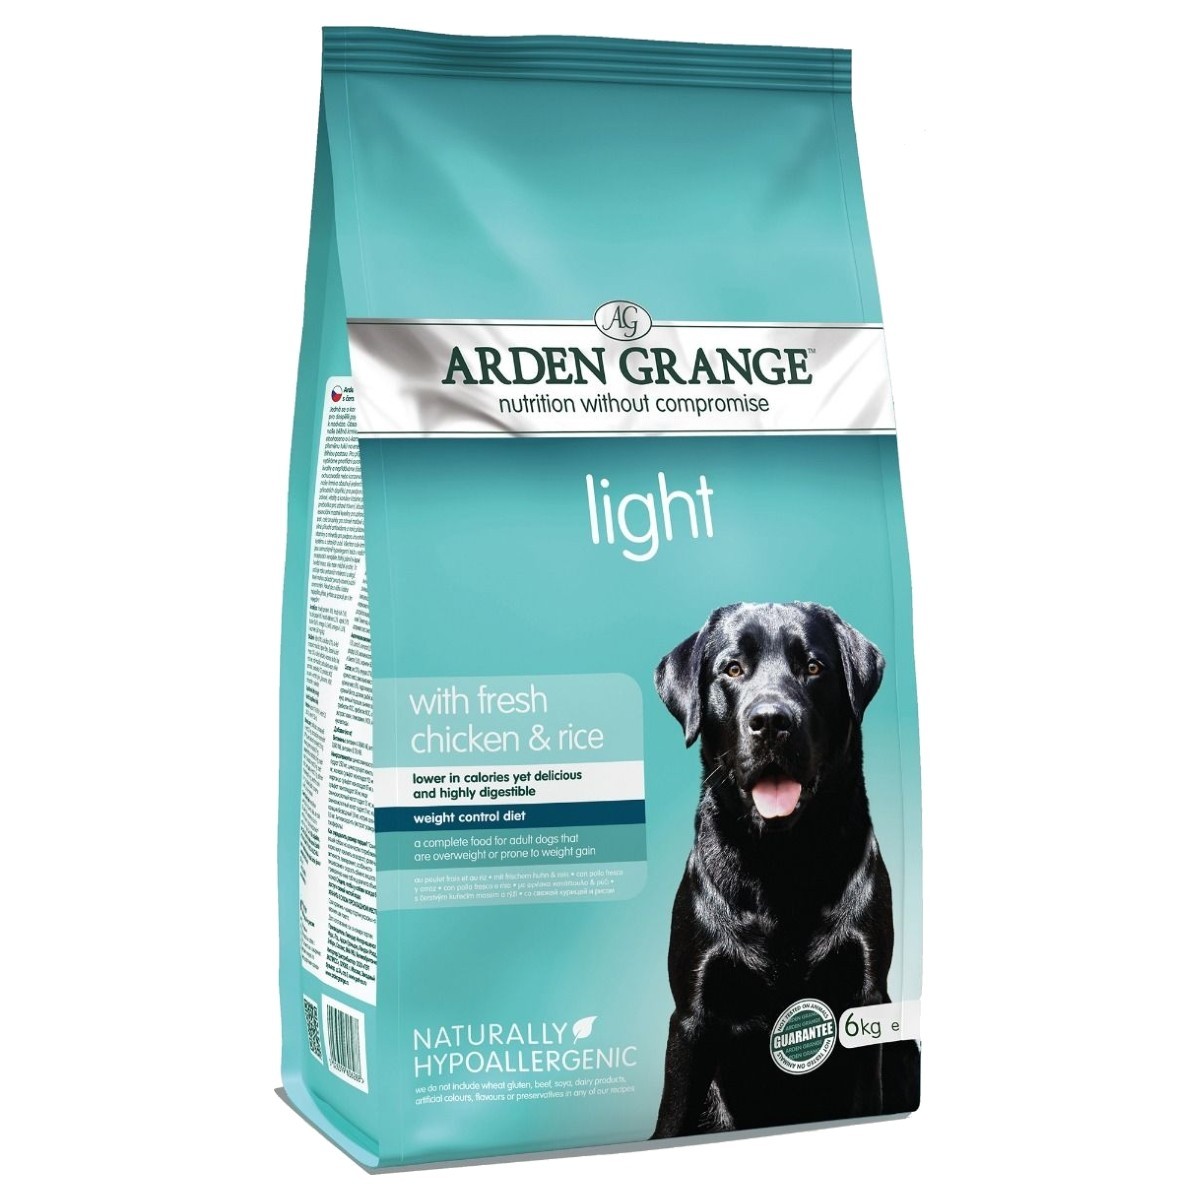 Каталог кормов для собак. Корм для собак Арден Грендж. Корм Arden Grange. Senior&Light sensitive (Arden Grange для чувствительных пожилых собак). Arden Grange sensitive для собак.